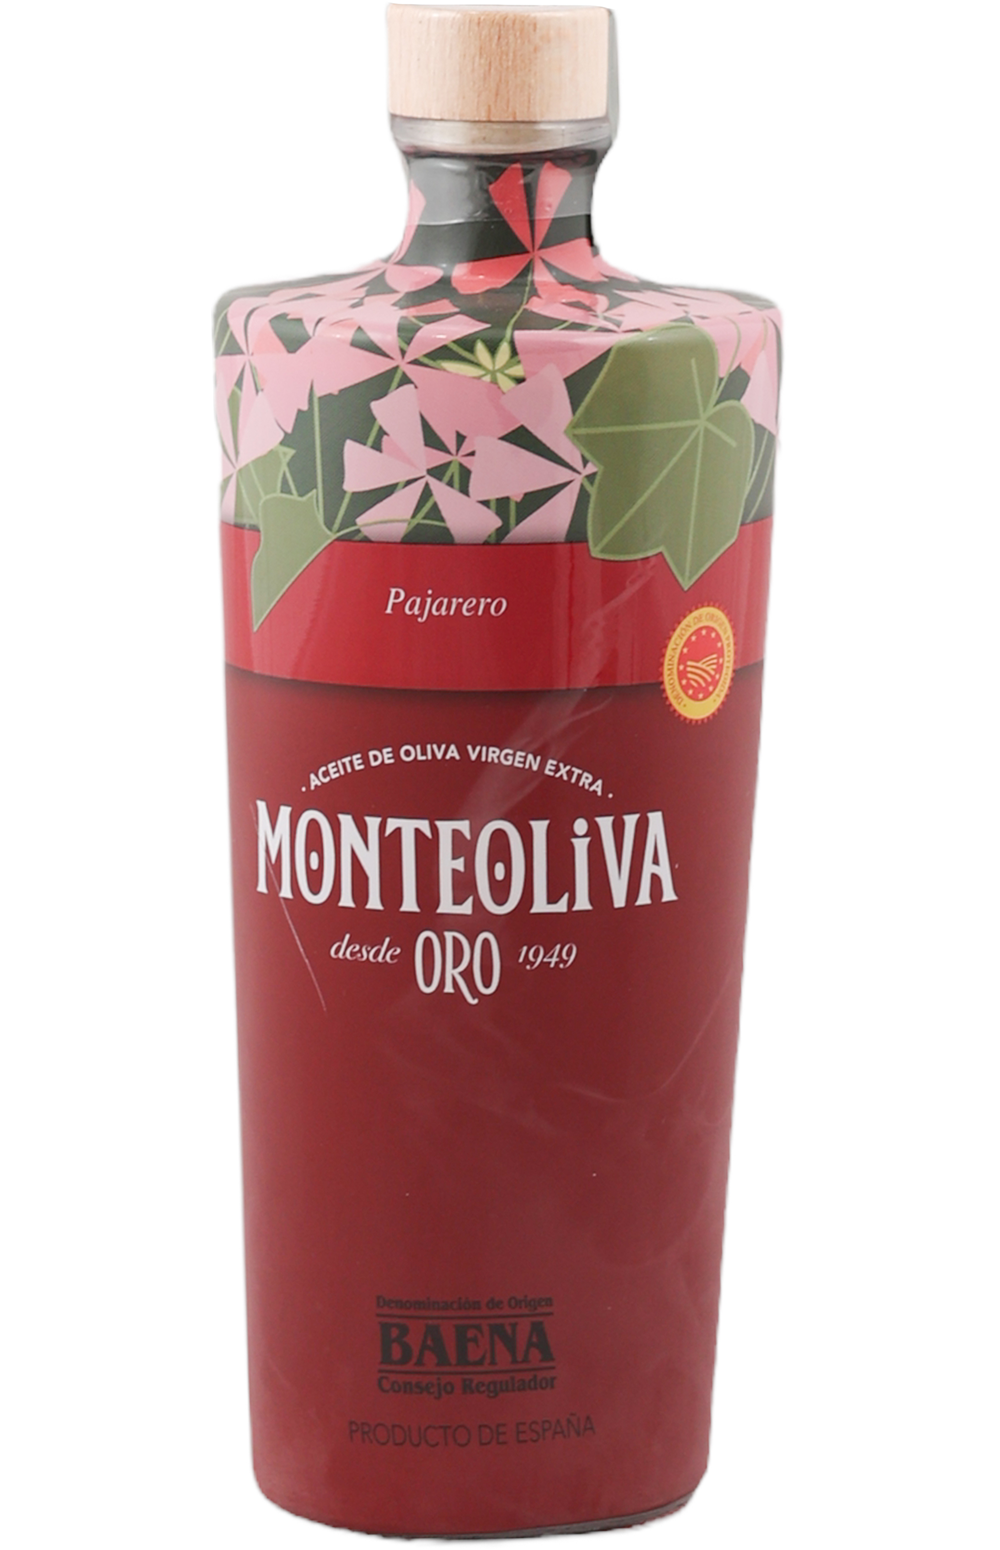 Monteoliva Oro Pajarero Extra Virgin Olive Oil